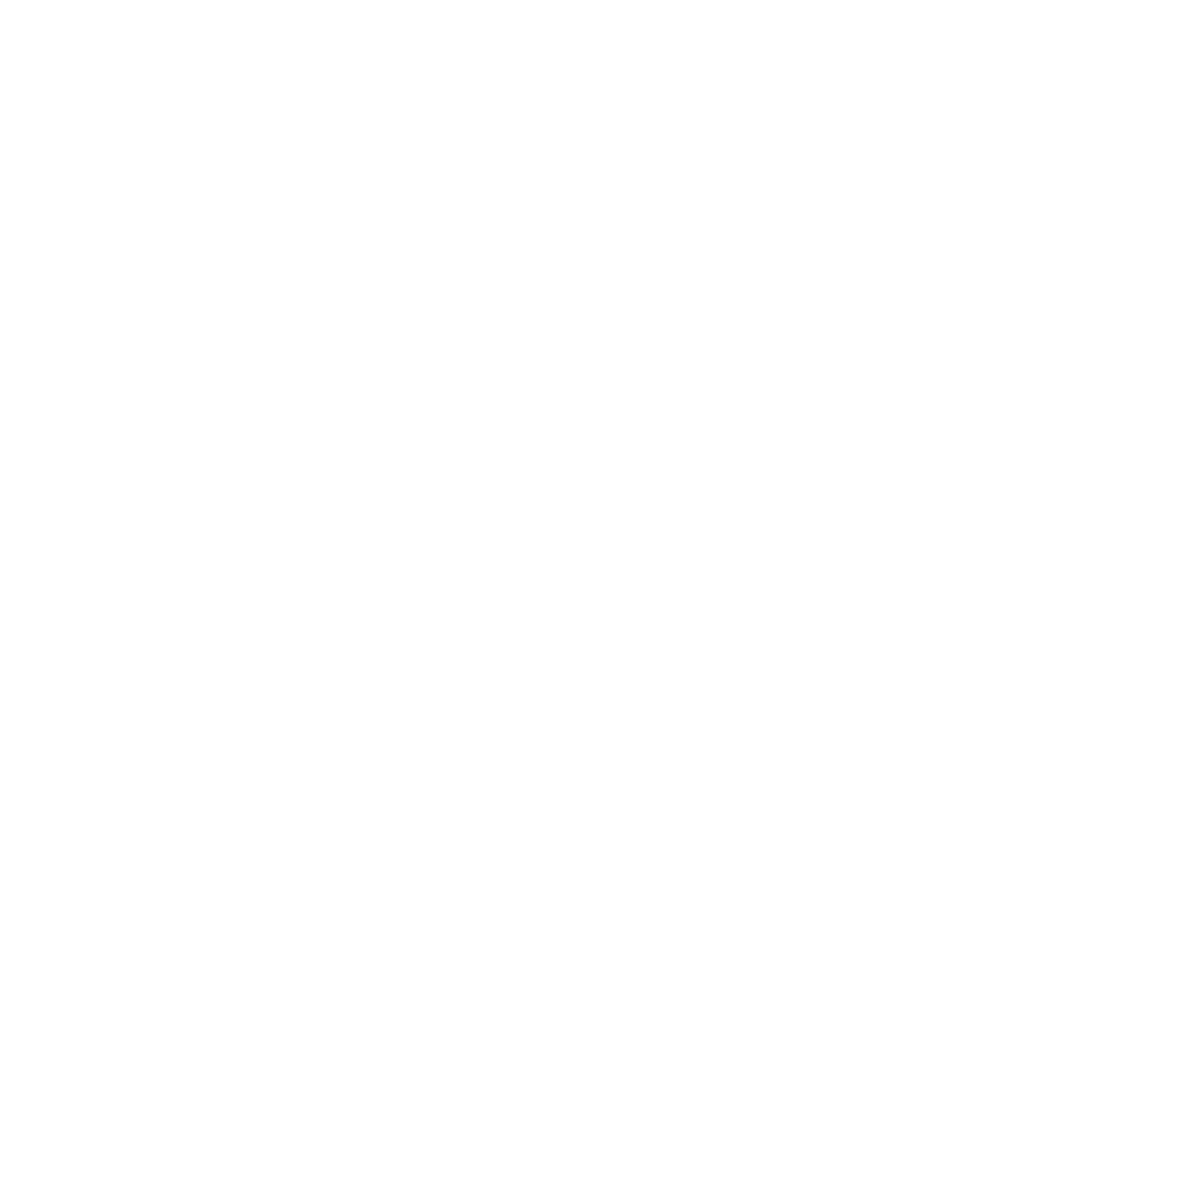 SB monogram